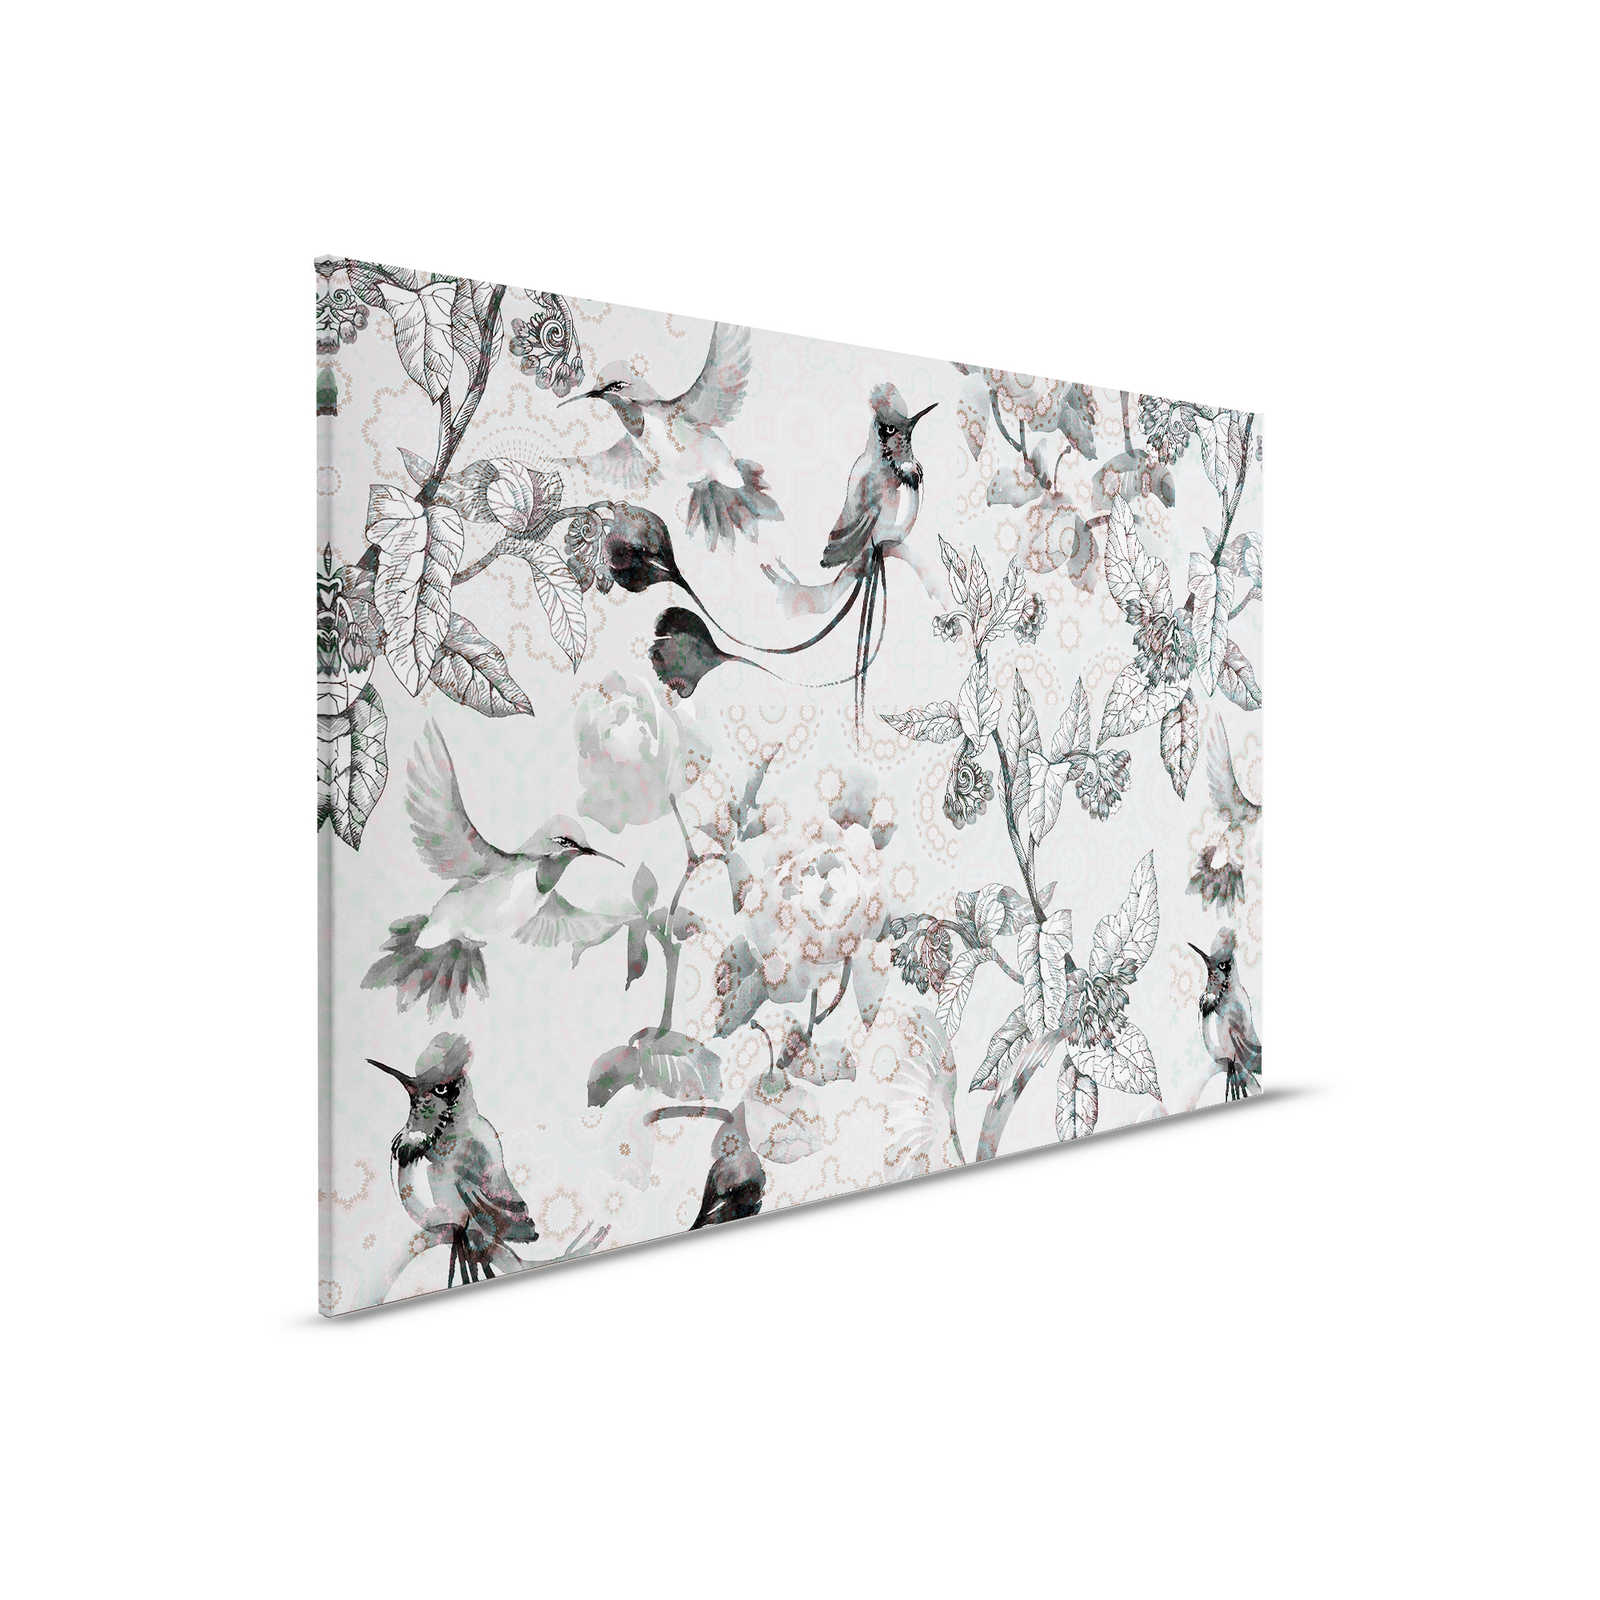         Leinwandbild Natur Design im Collage Stil | exotic mosaic 4 – 0,90 m x 0,60 m
    